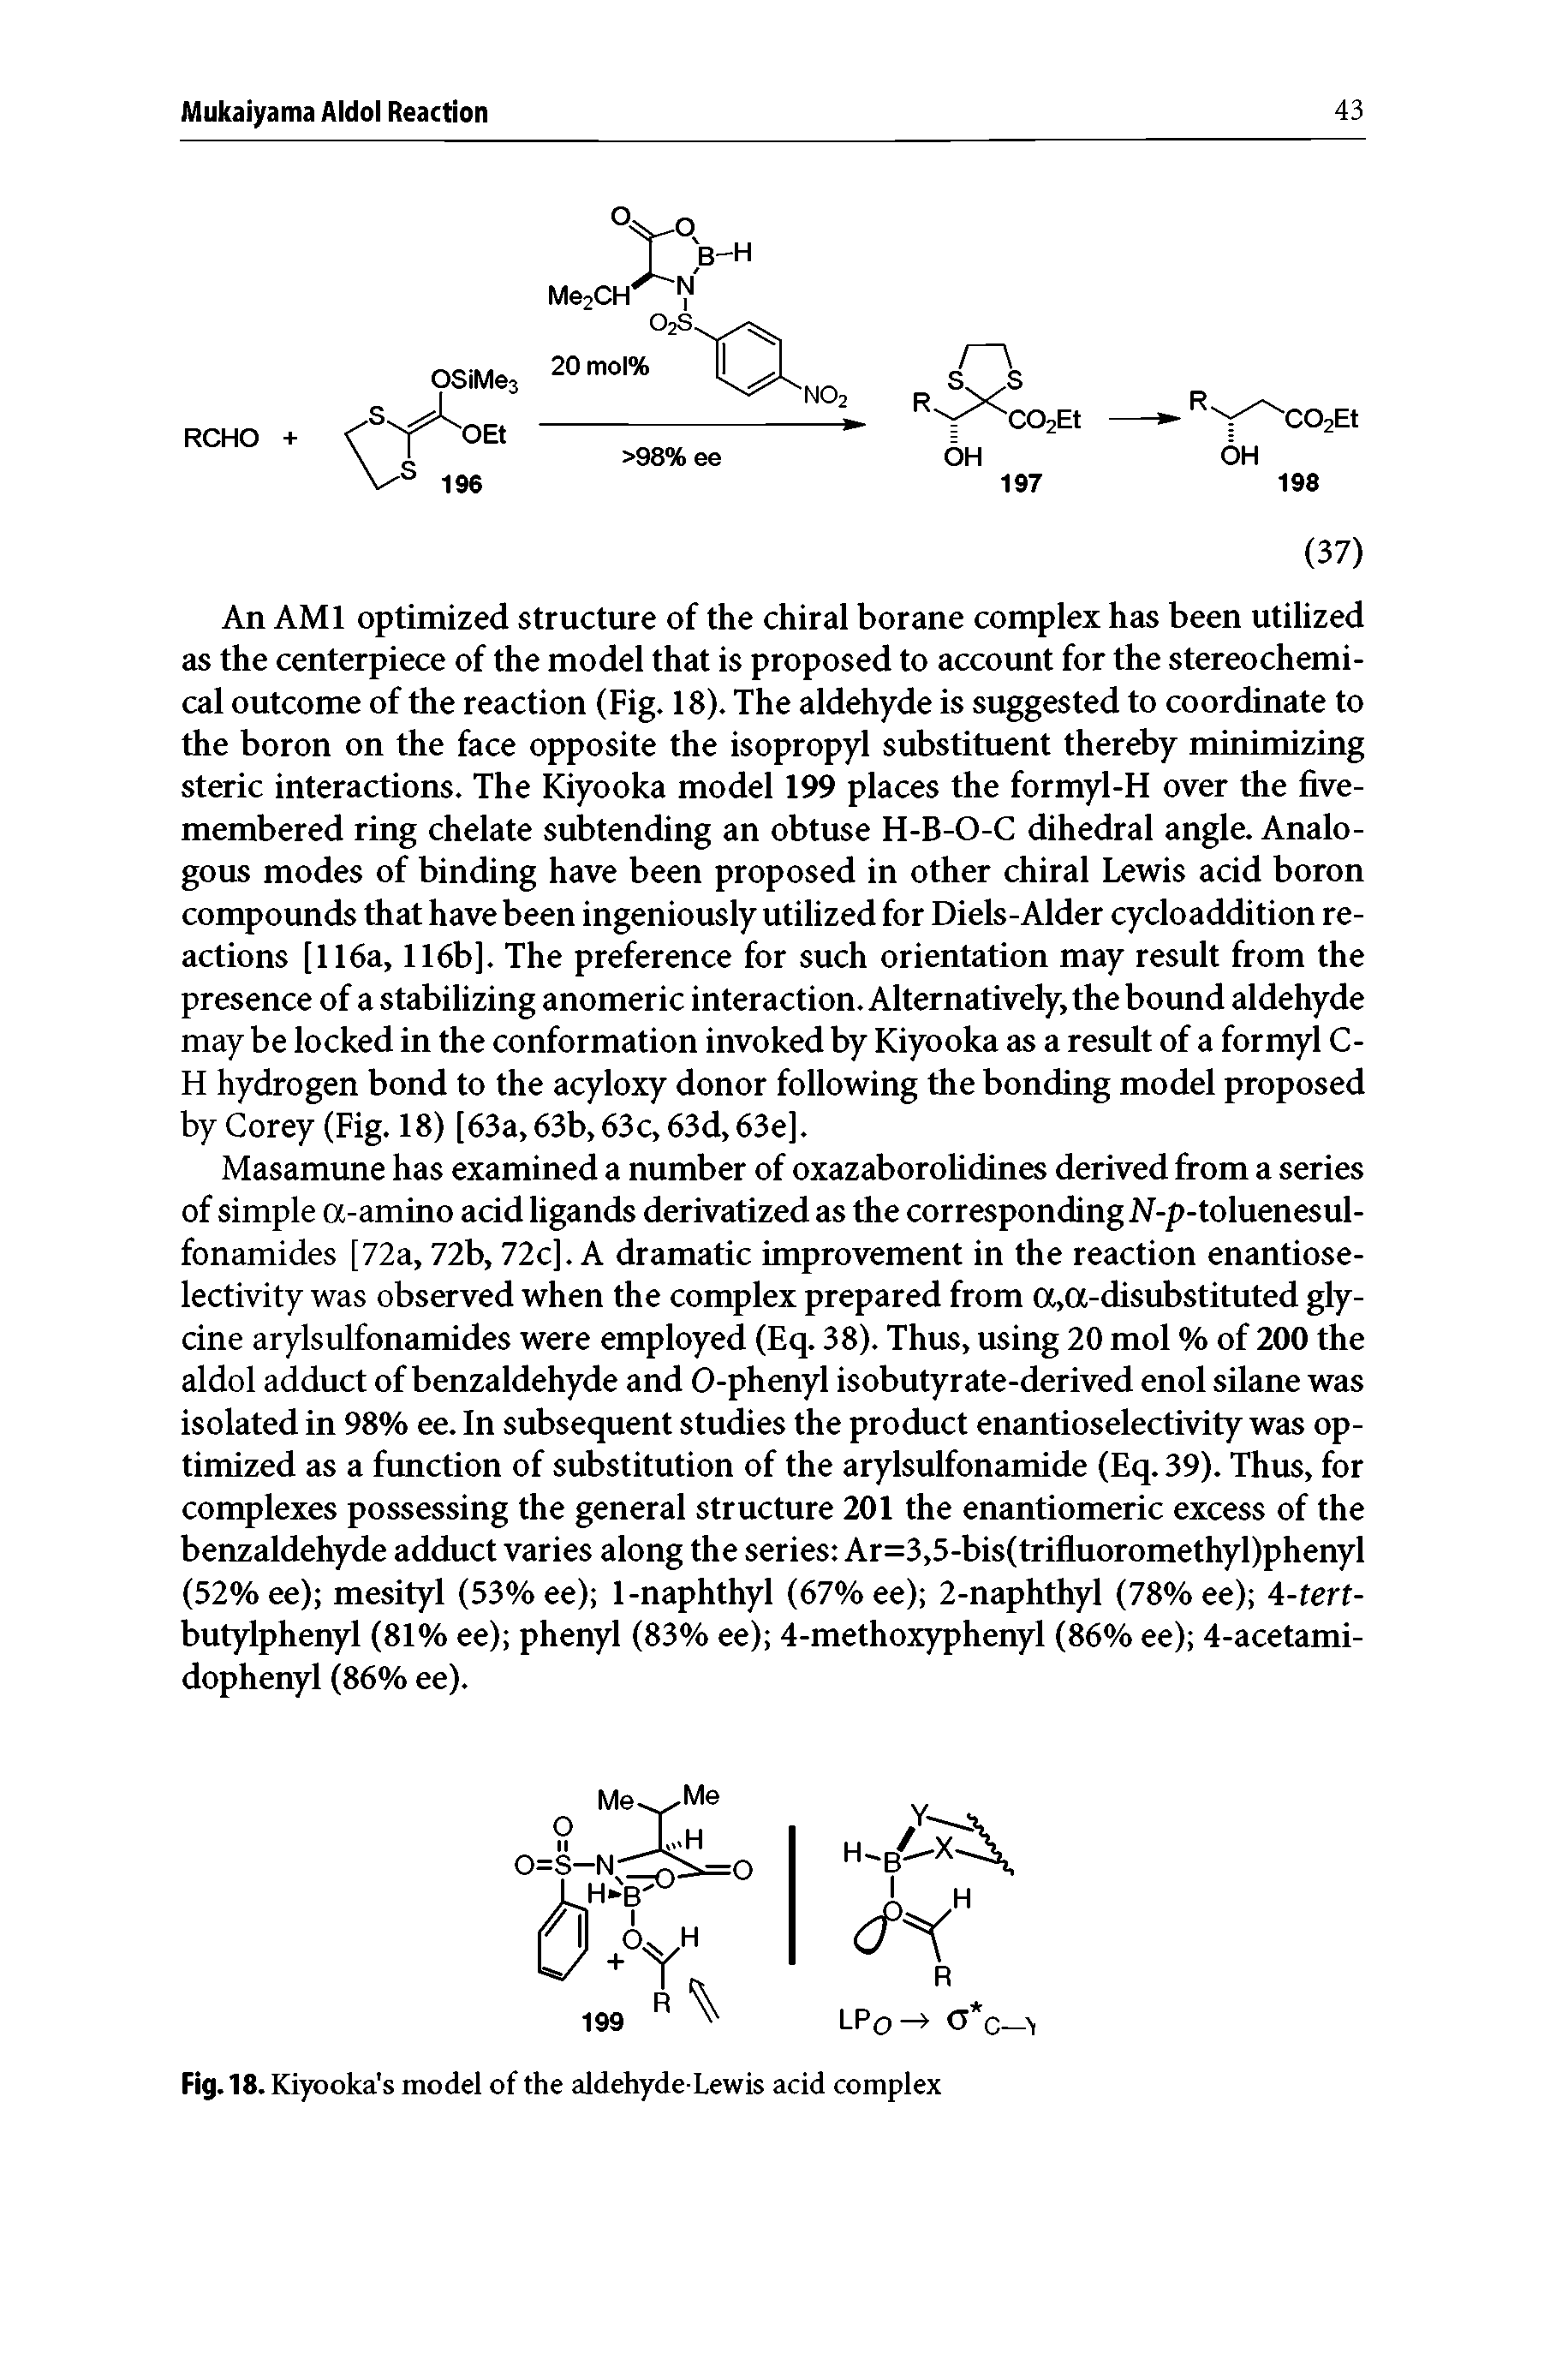 Fig. 18. Kiyooka s model of the aldehyde-Lewis acid complex...